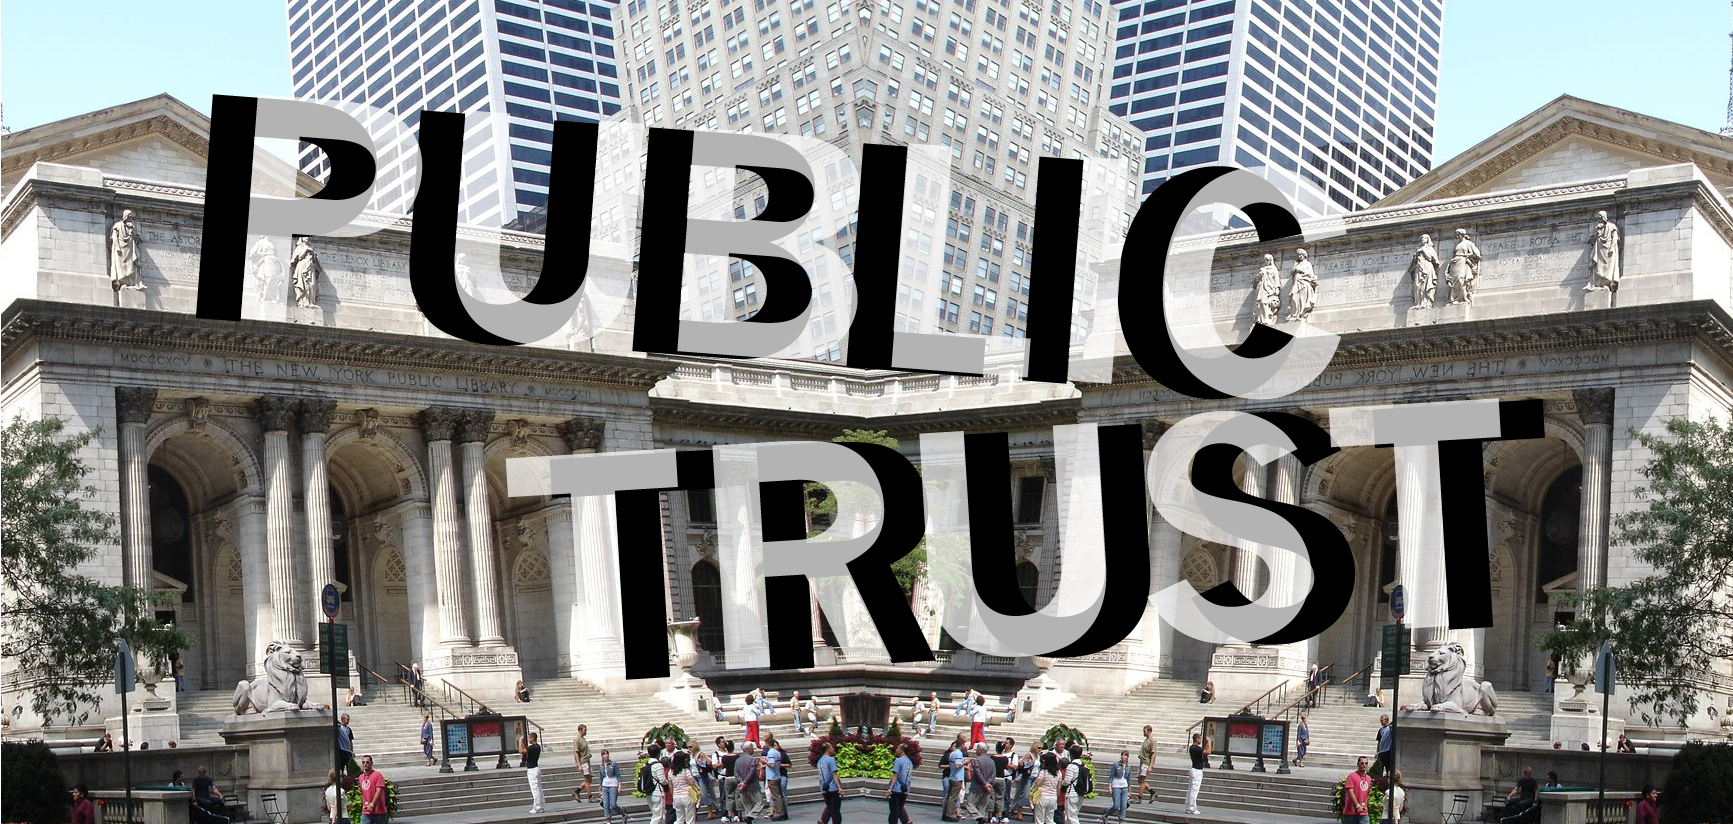 the public office is a public trust essay